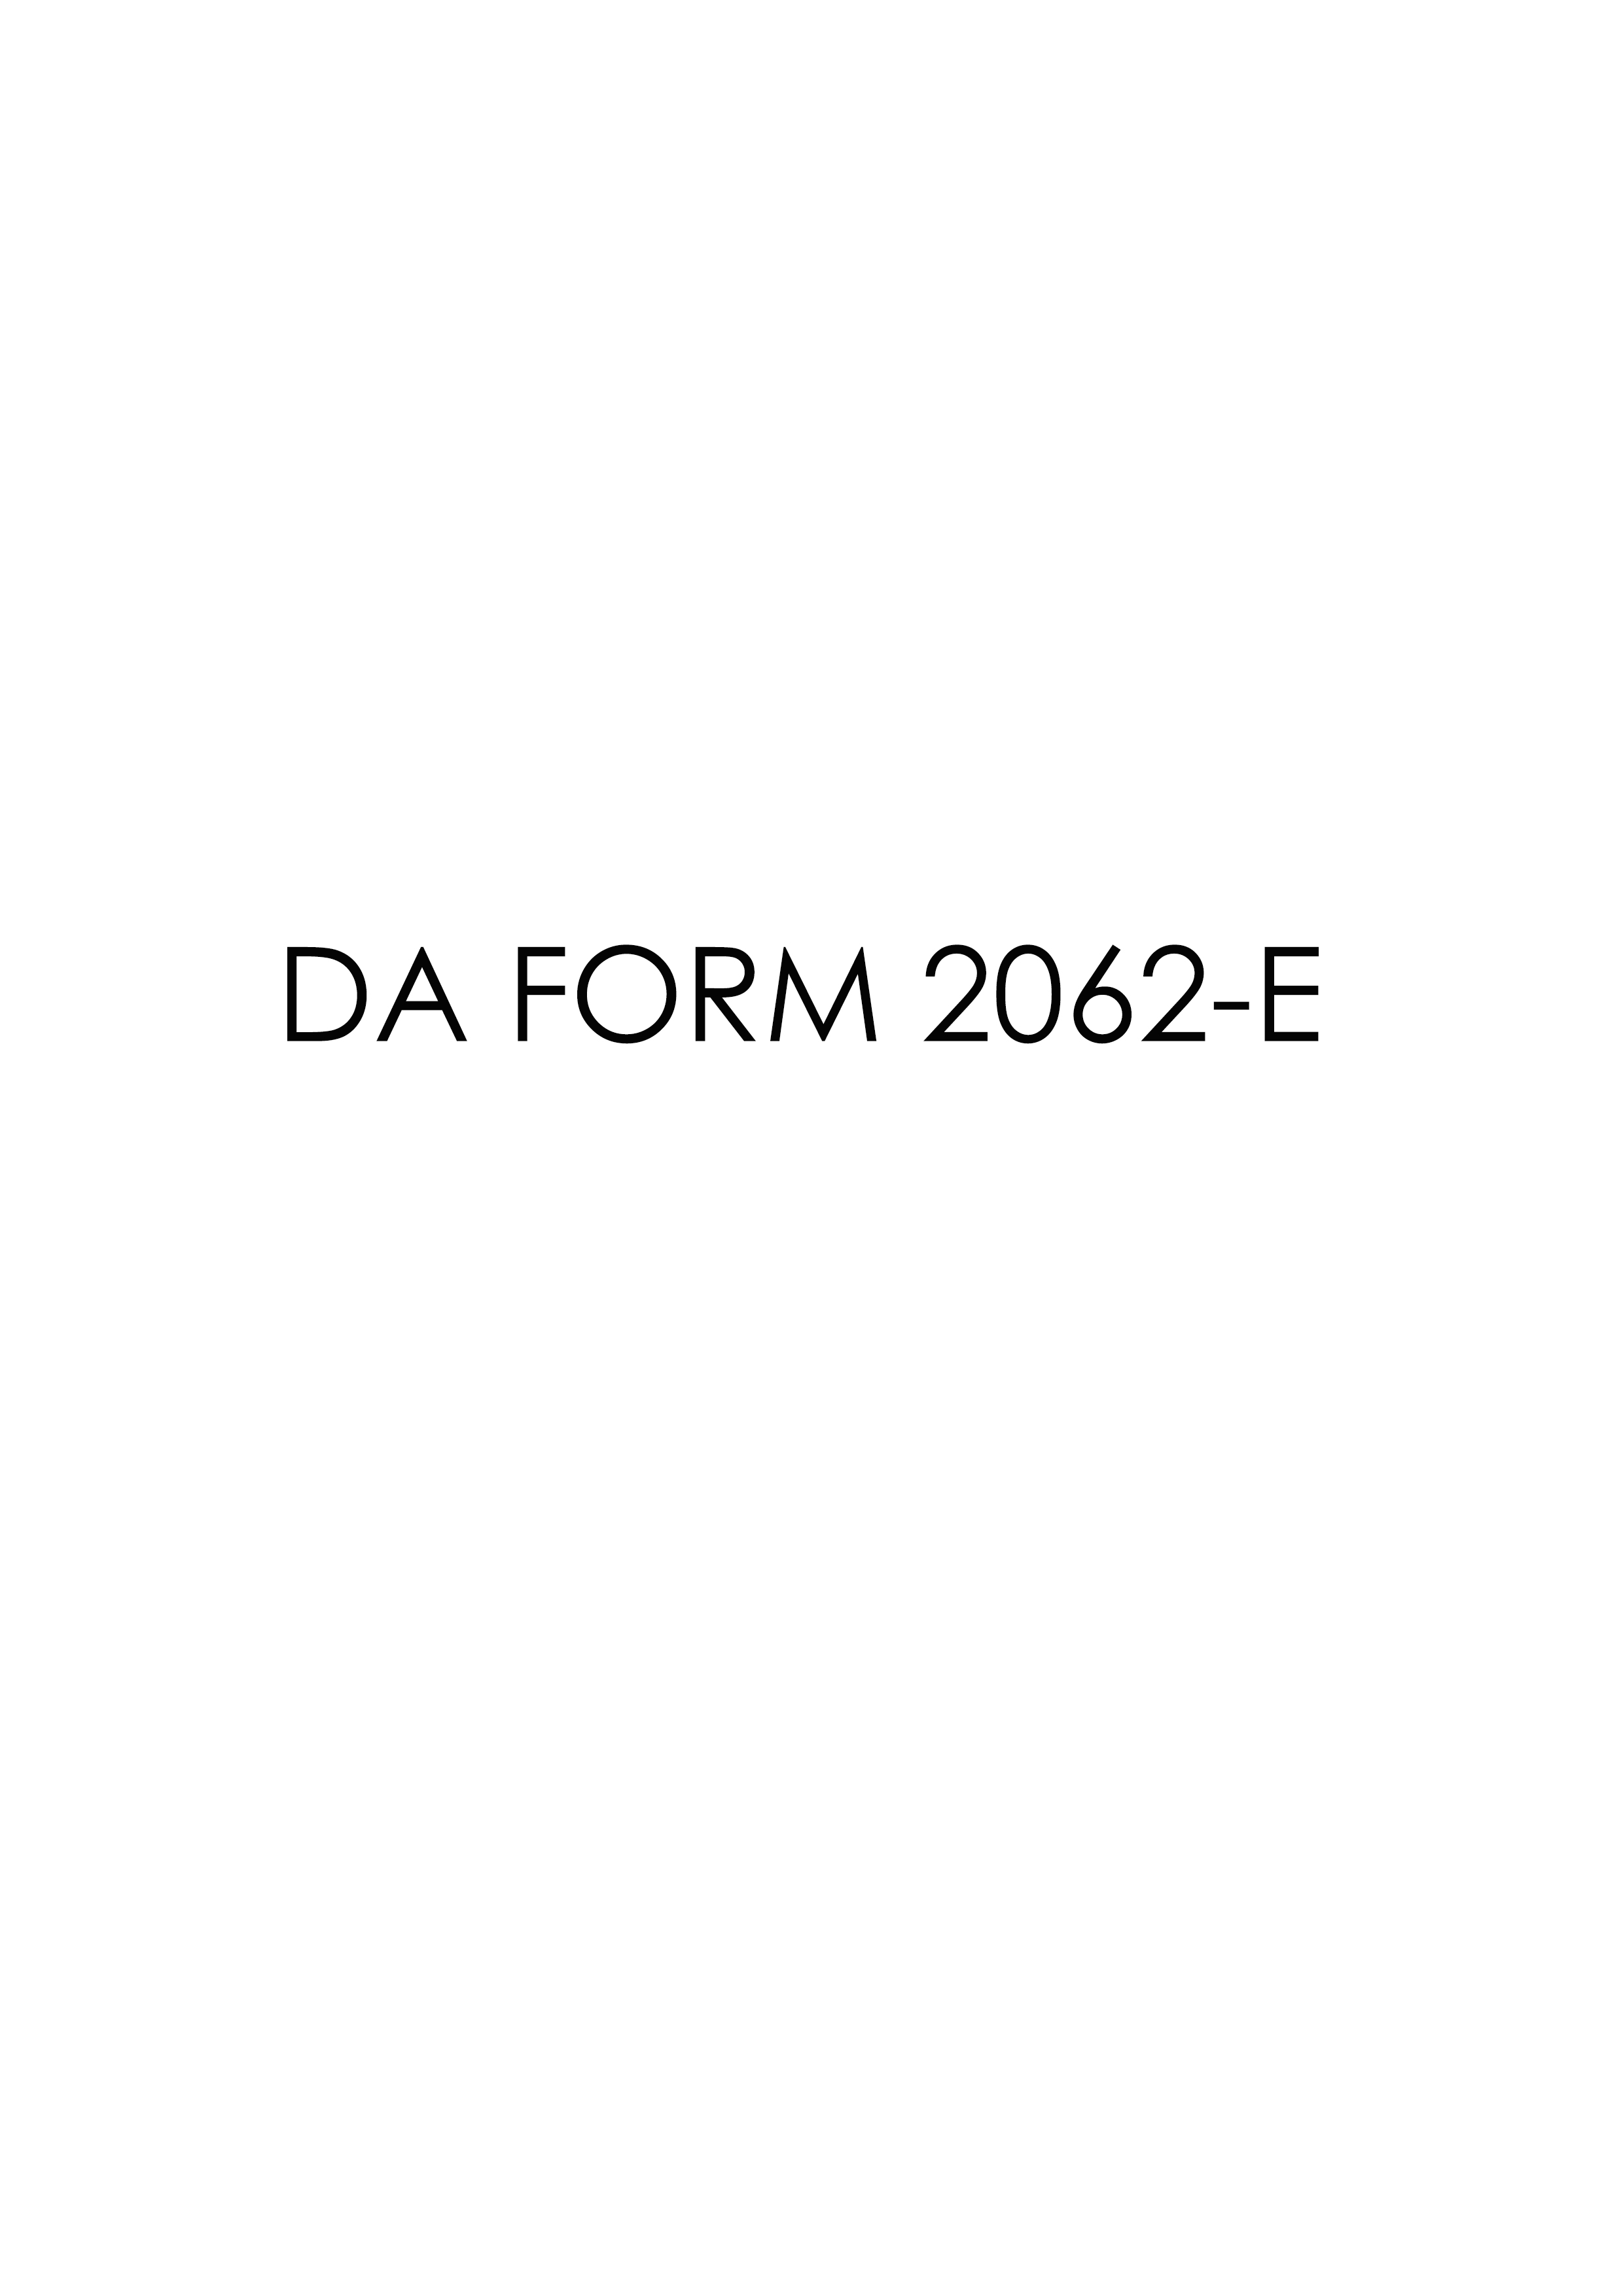 Download da 2062-E Form Free